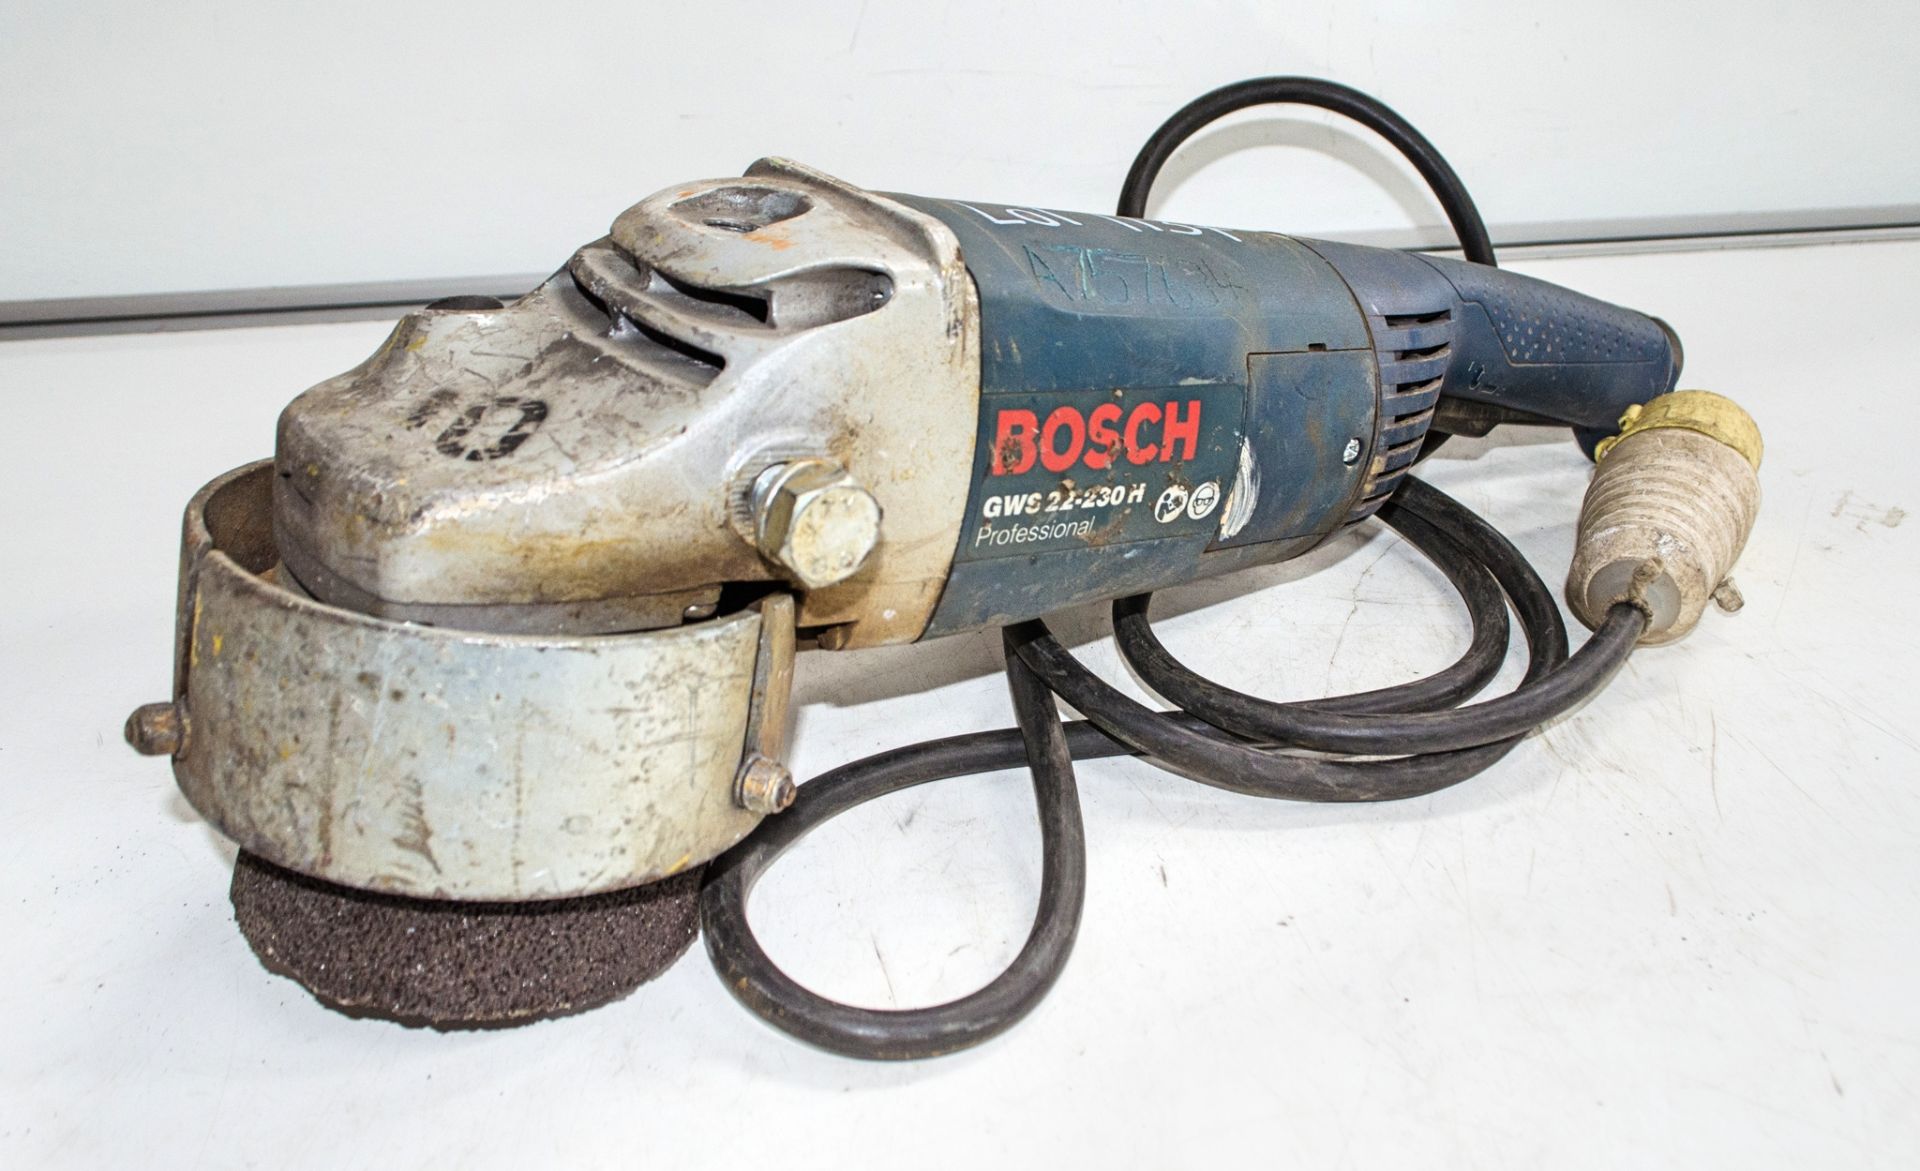 Bosch GWS22-230H 110v 230mm angle grinder A757634